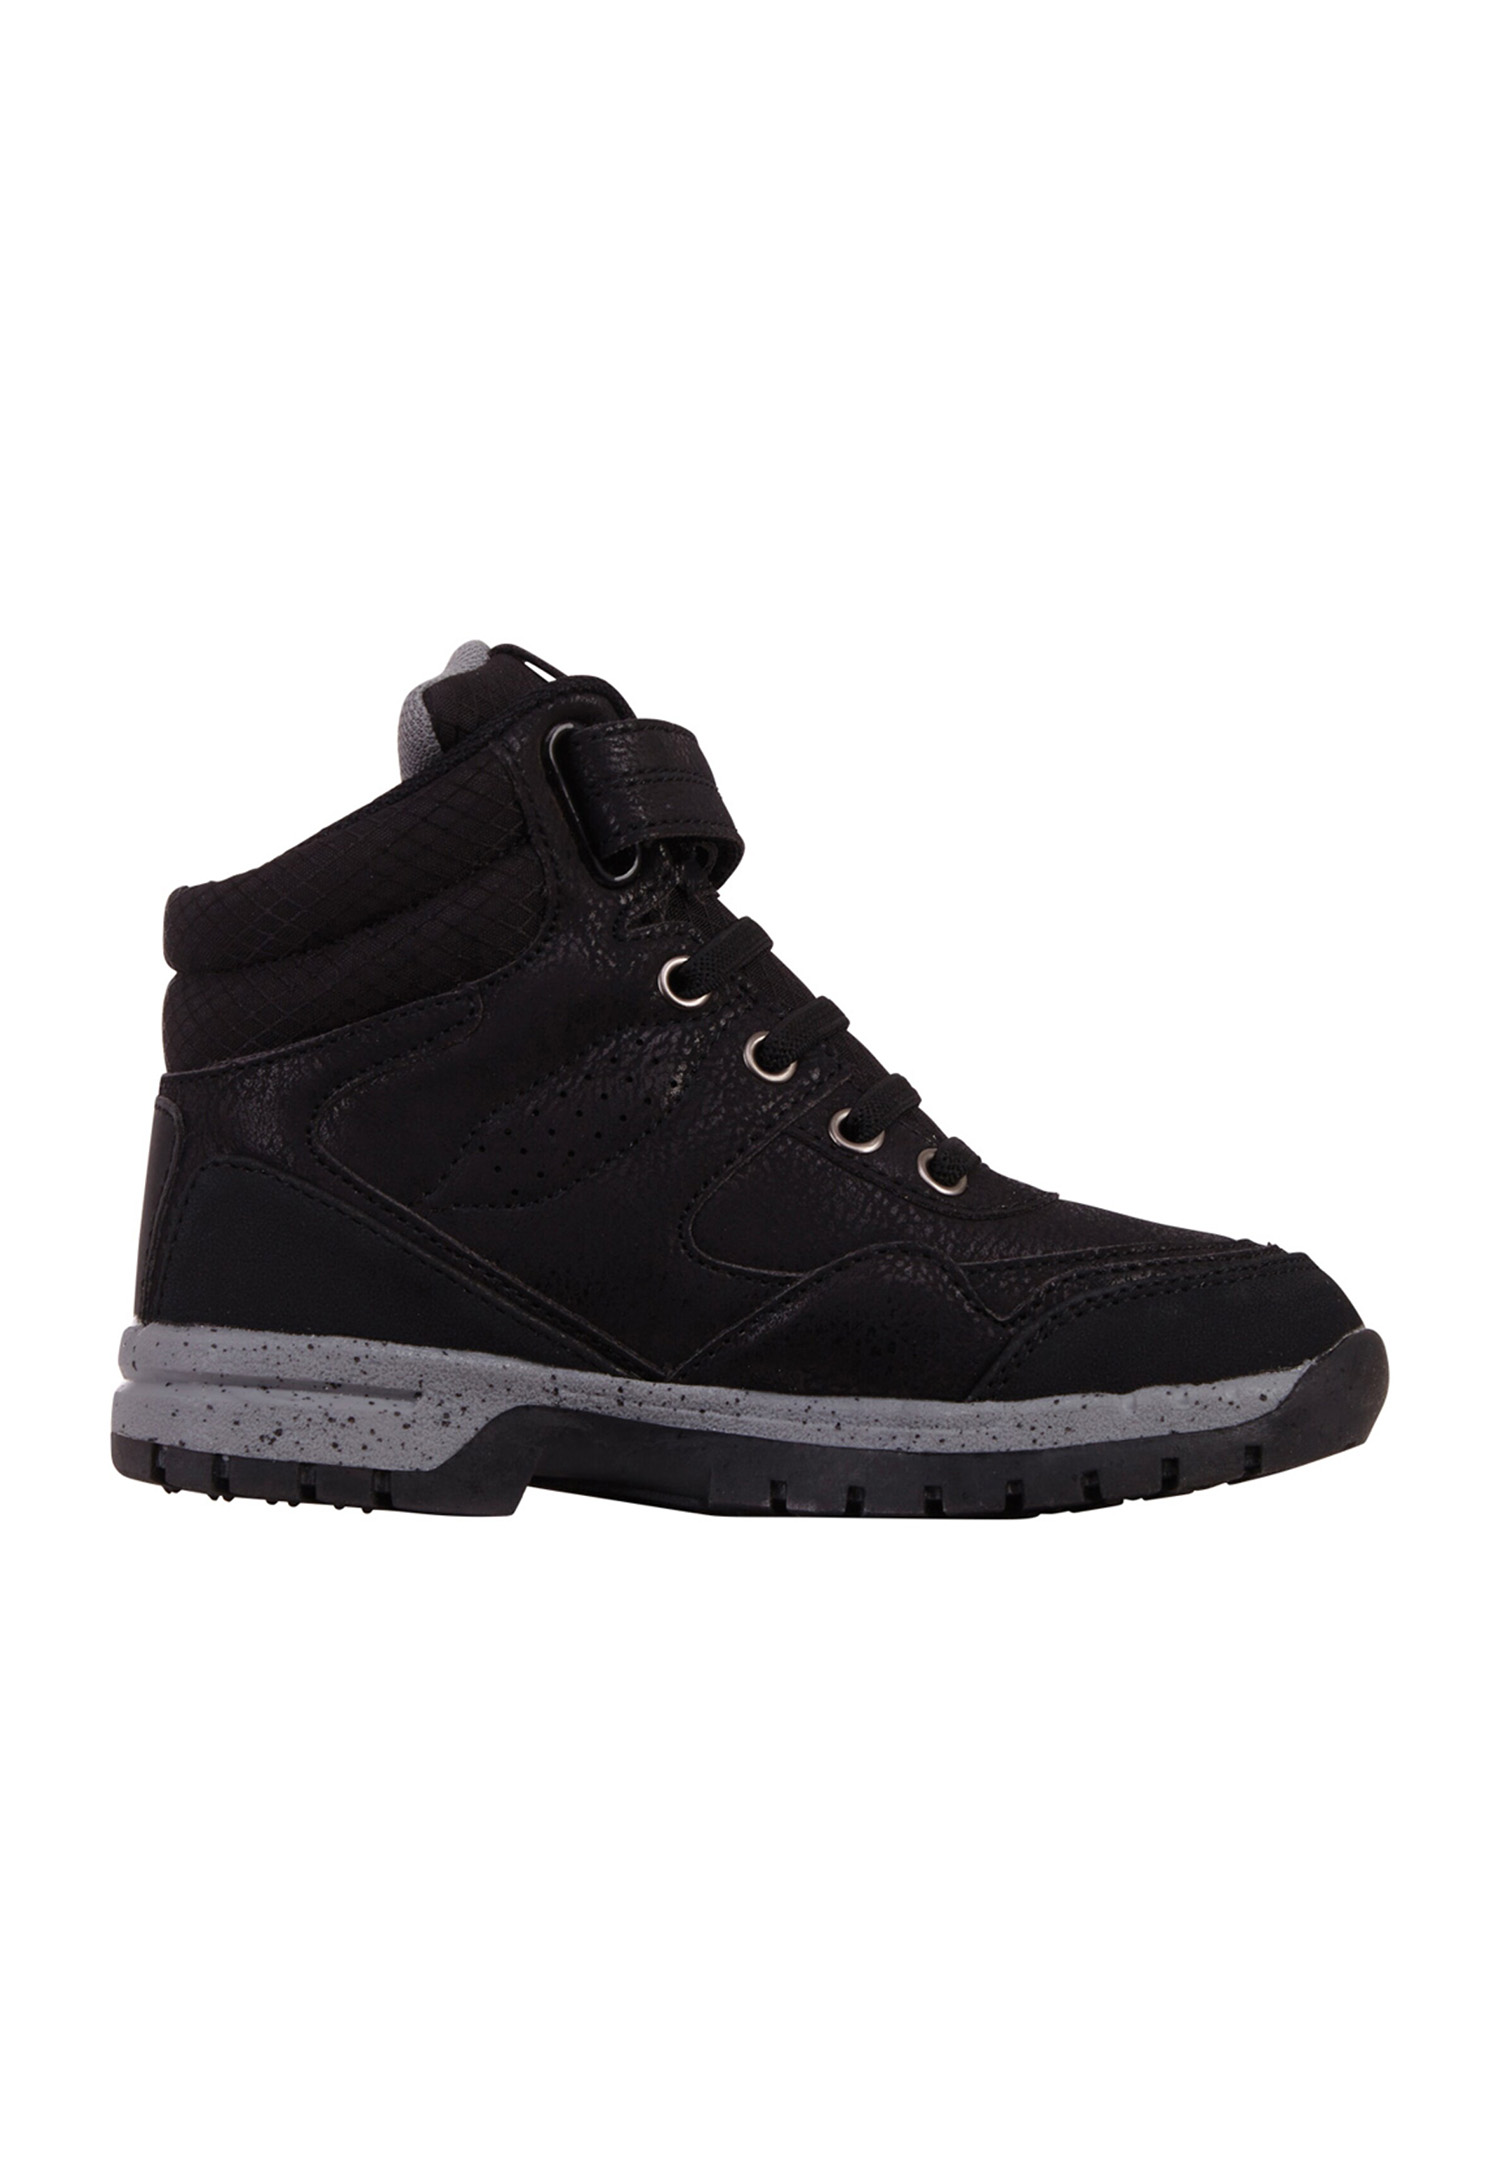 Kappa Unisex Kinder Sneaker High Top Stylecode 260732T 1116 schwarz